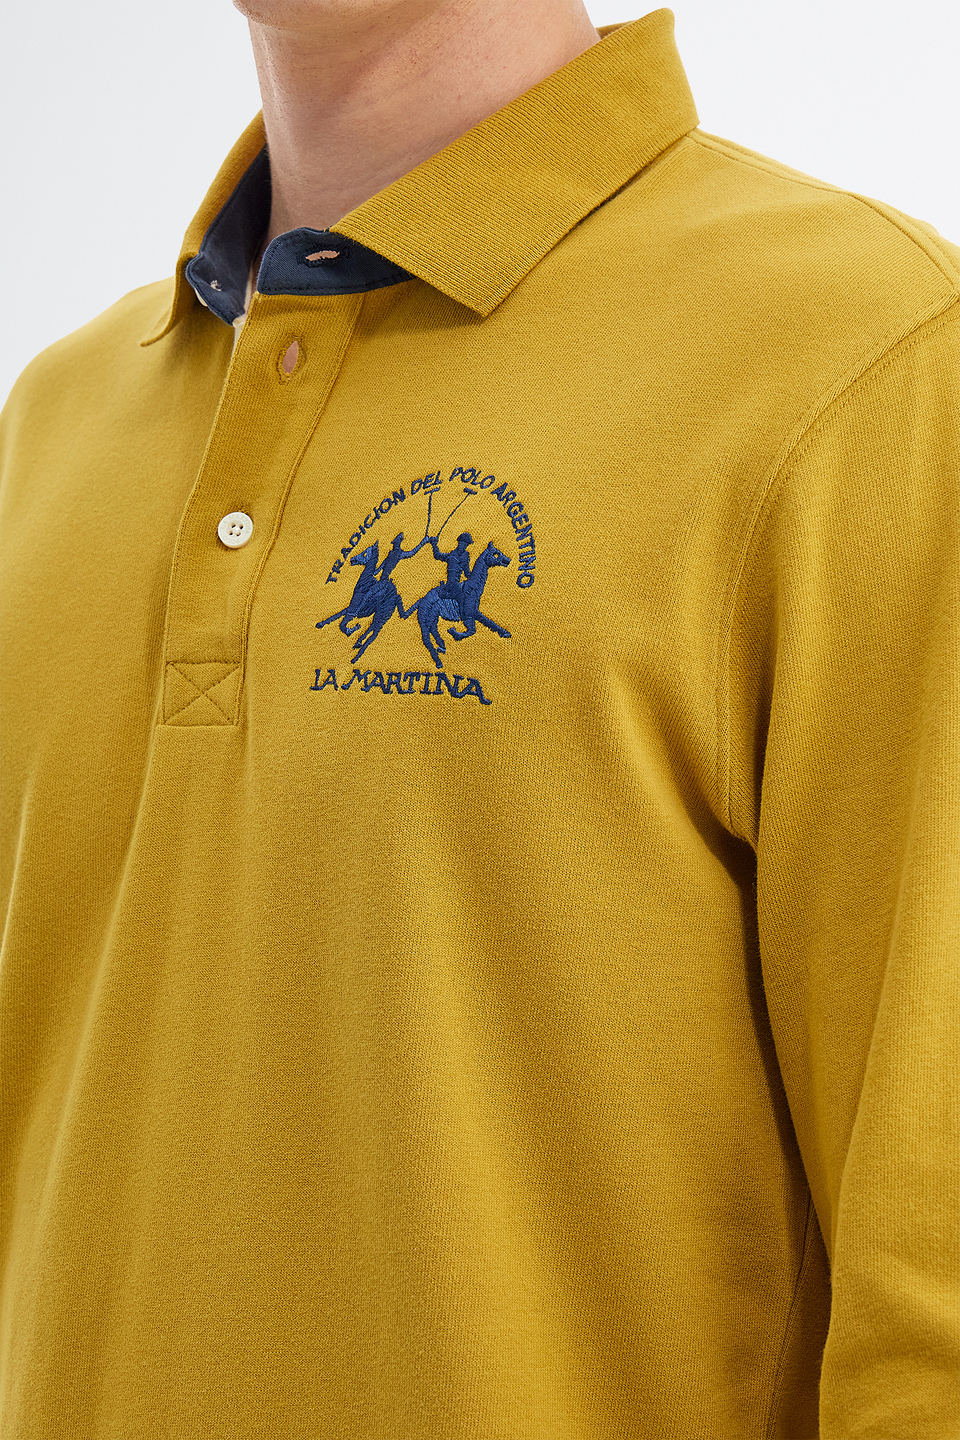 Herren-Poloshirt aus Baumwolljersey mit langen Ärmeln | La Martina - Official Online Shop